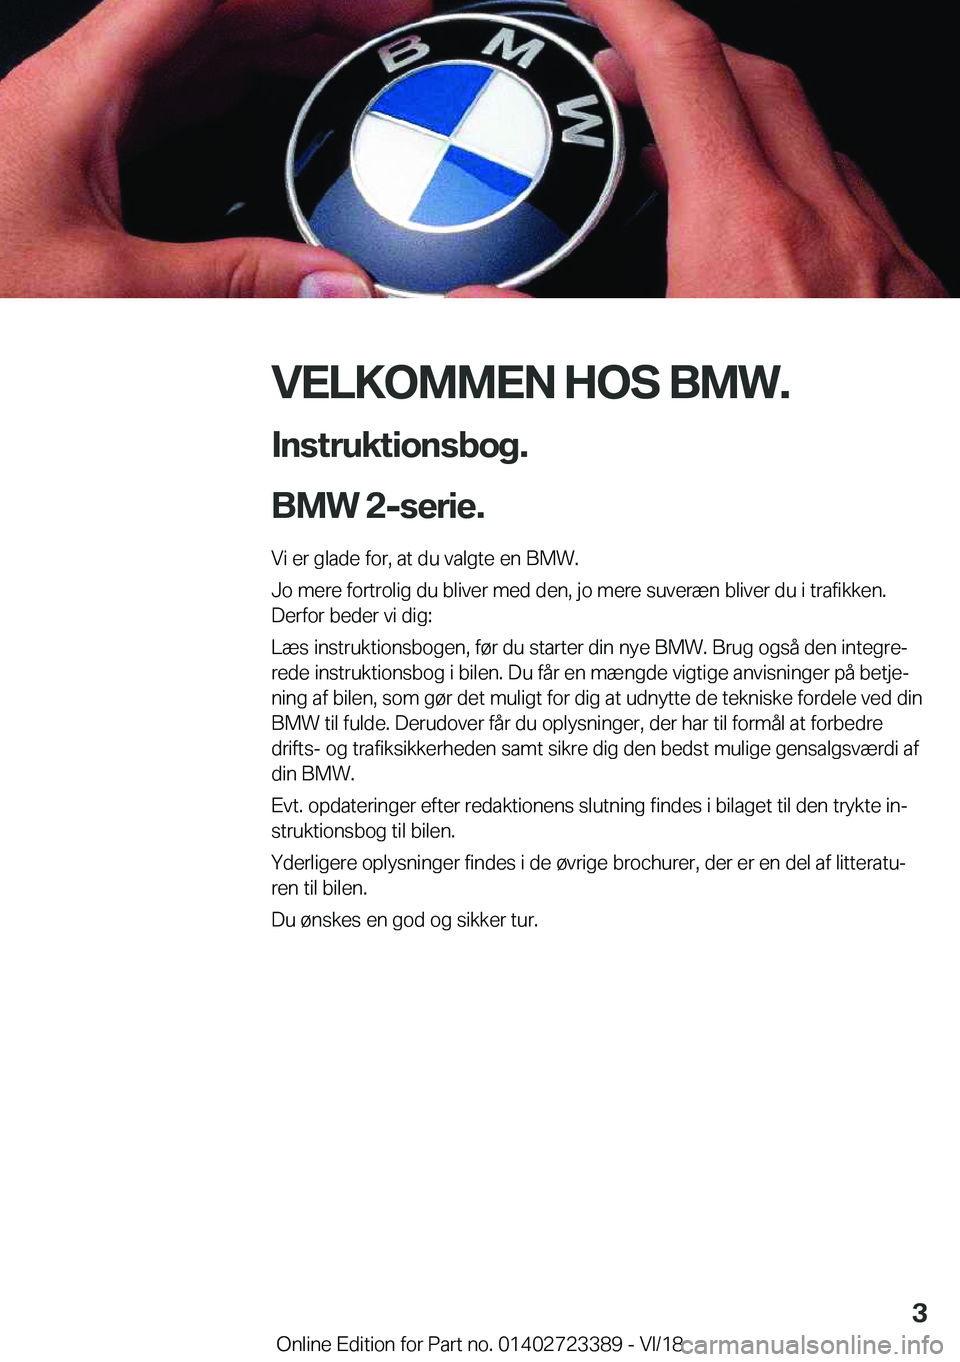 BMW 2 SERIES COUPE 2019  InstruktionsbØger (in Danish) �V�E�L�K�O�M�M�E�N��H�O�S��B�M�W�.
�I�n�s�t�r�u�k�t�i�o�n�s�b�o�g�.
�B�M�W��2�-�s�e�r�i�e�.� �V�i��e�r��g�l�a�d�e��f�o�r�,��a�t��d�u��v�a�l�g�t�e��e�n��B�M�W�.
�J�o��m�e�r�e��f�o�r�t�r�o